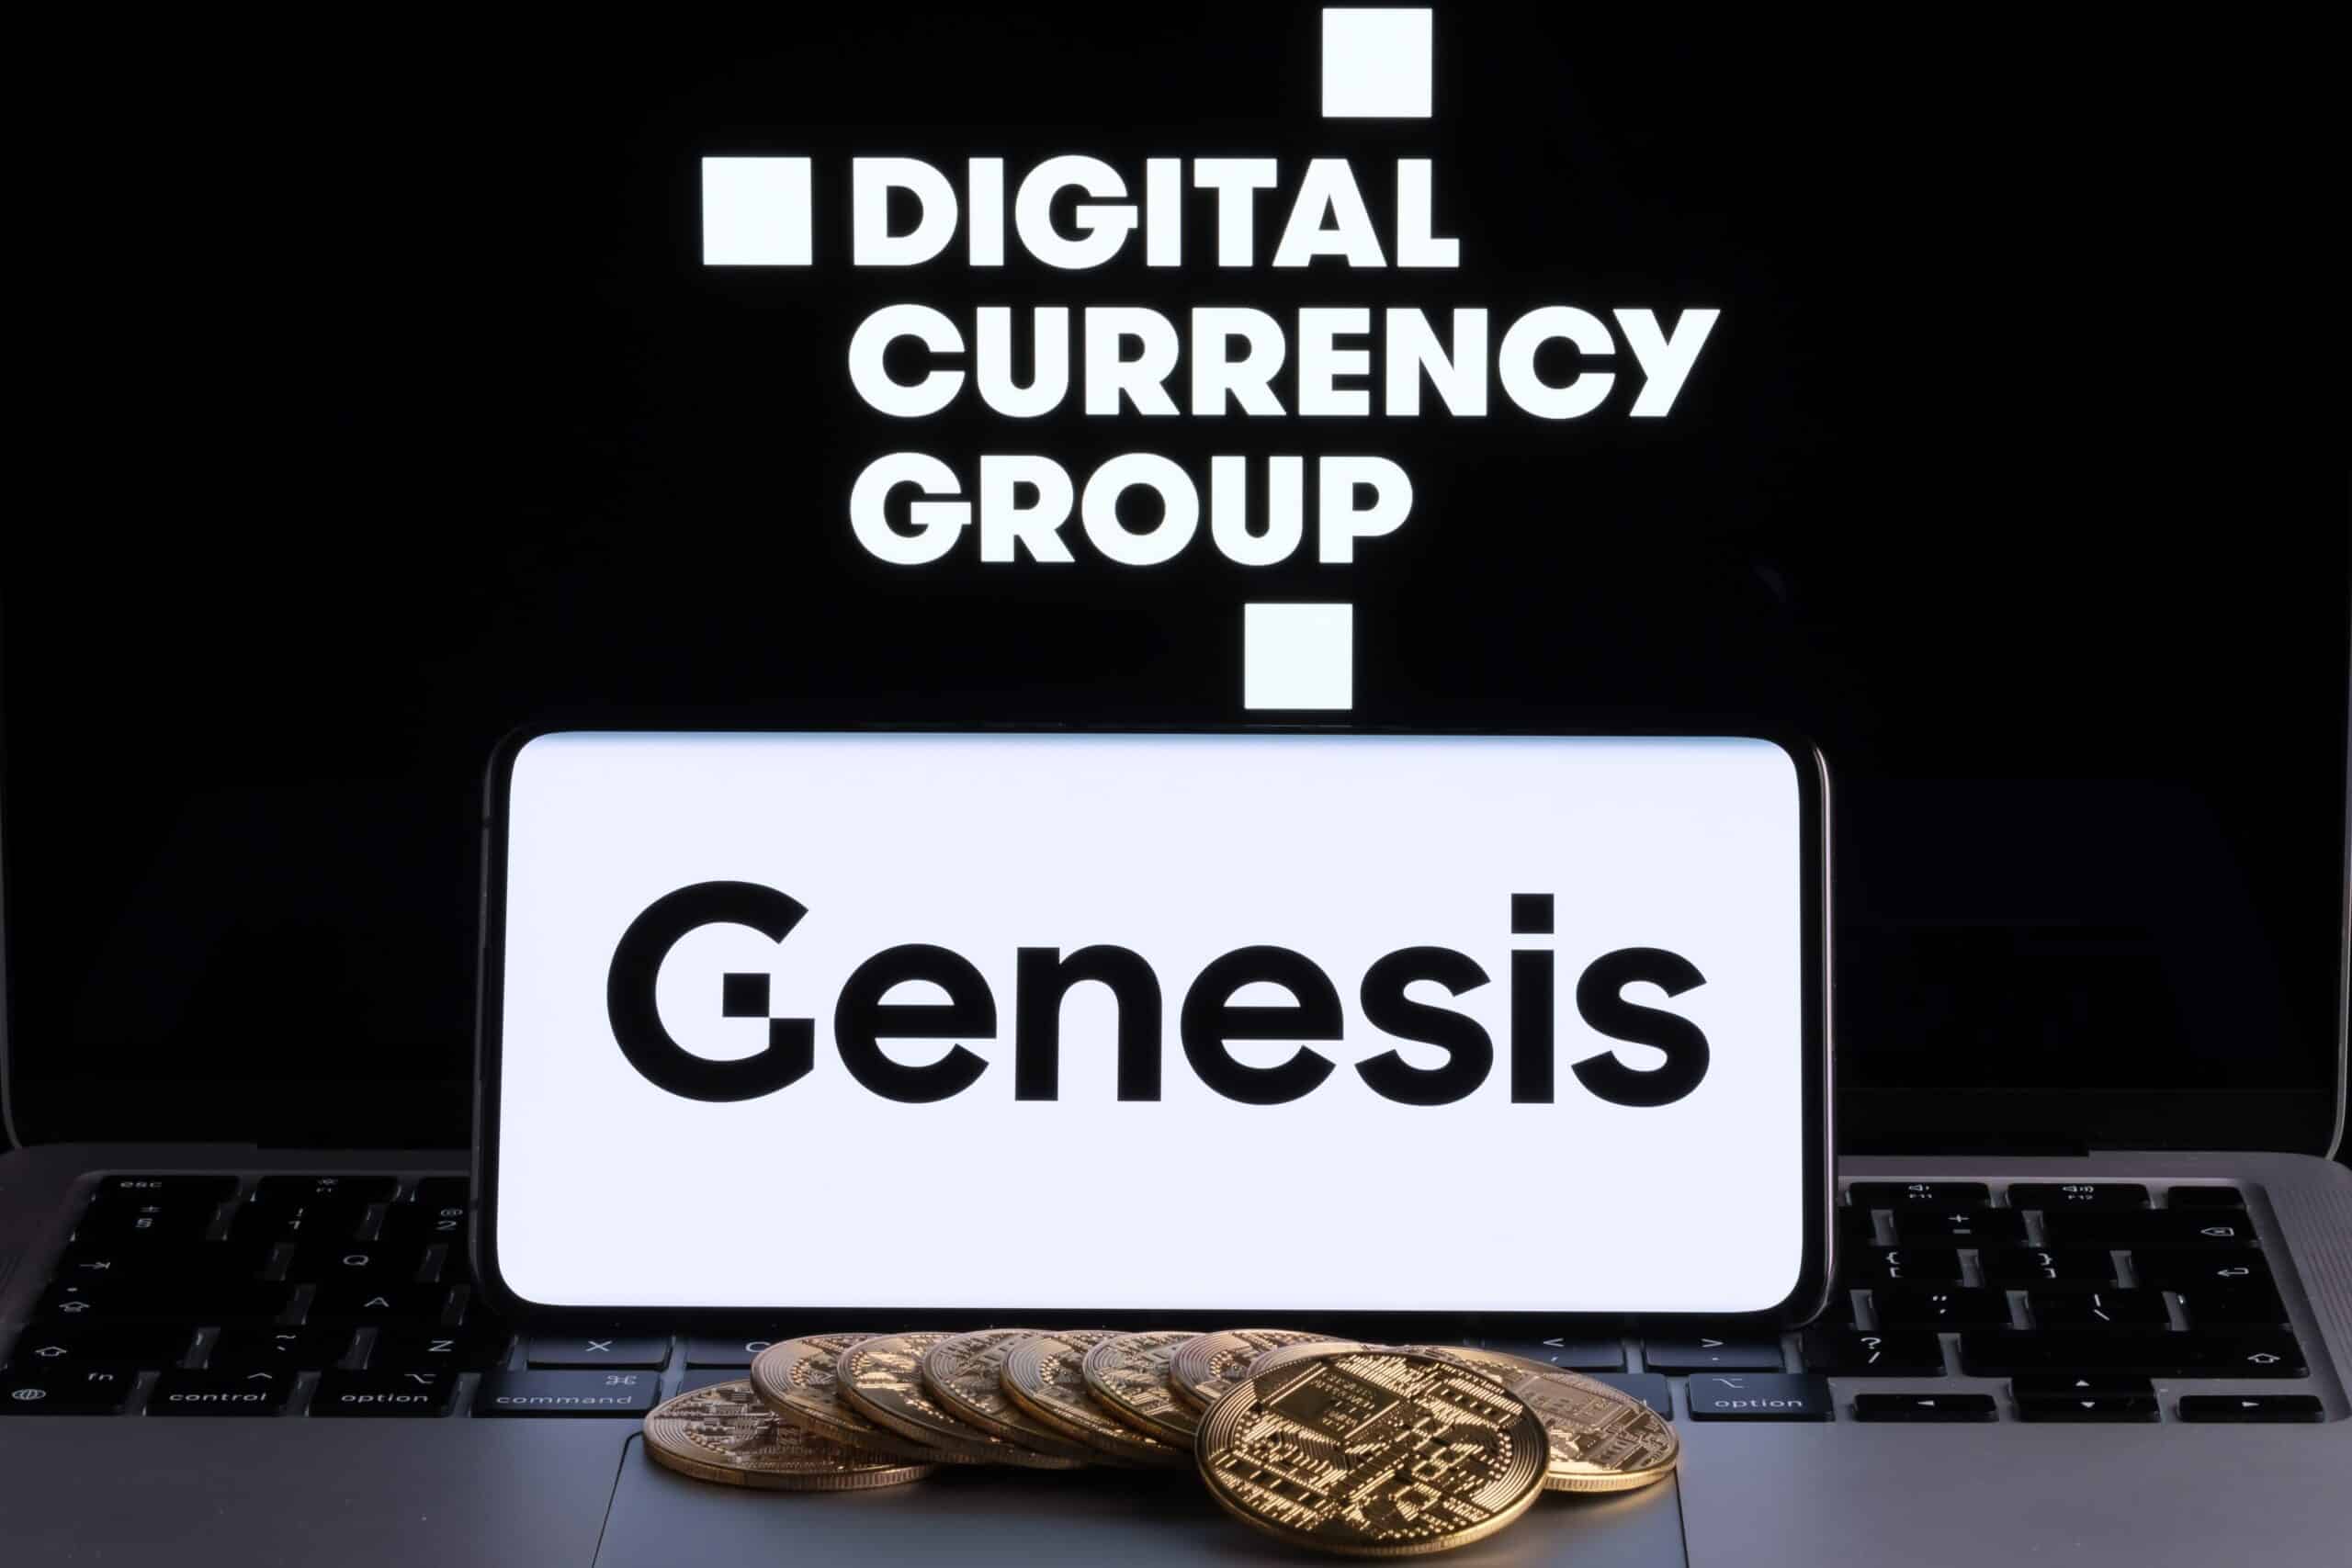 An image of Genesis logo juxtaposed against DCG logo